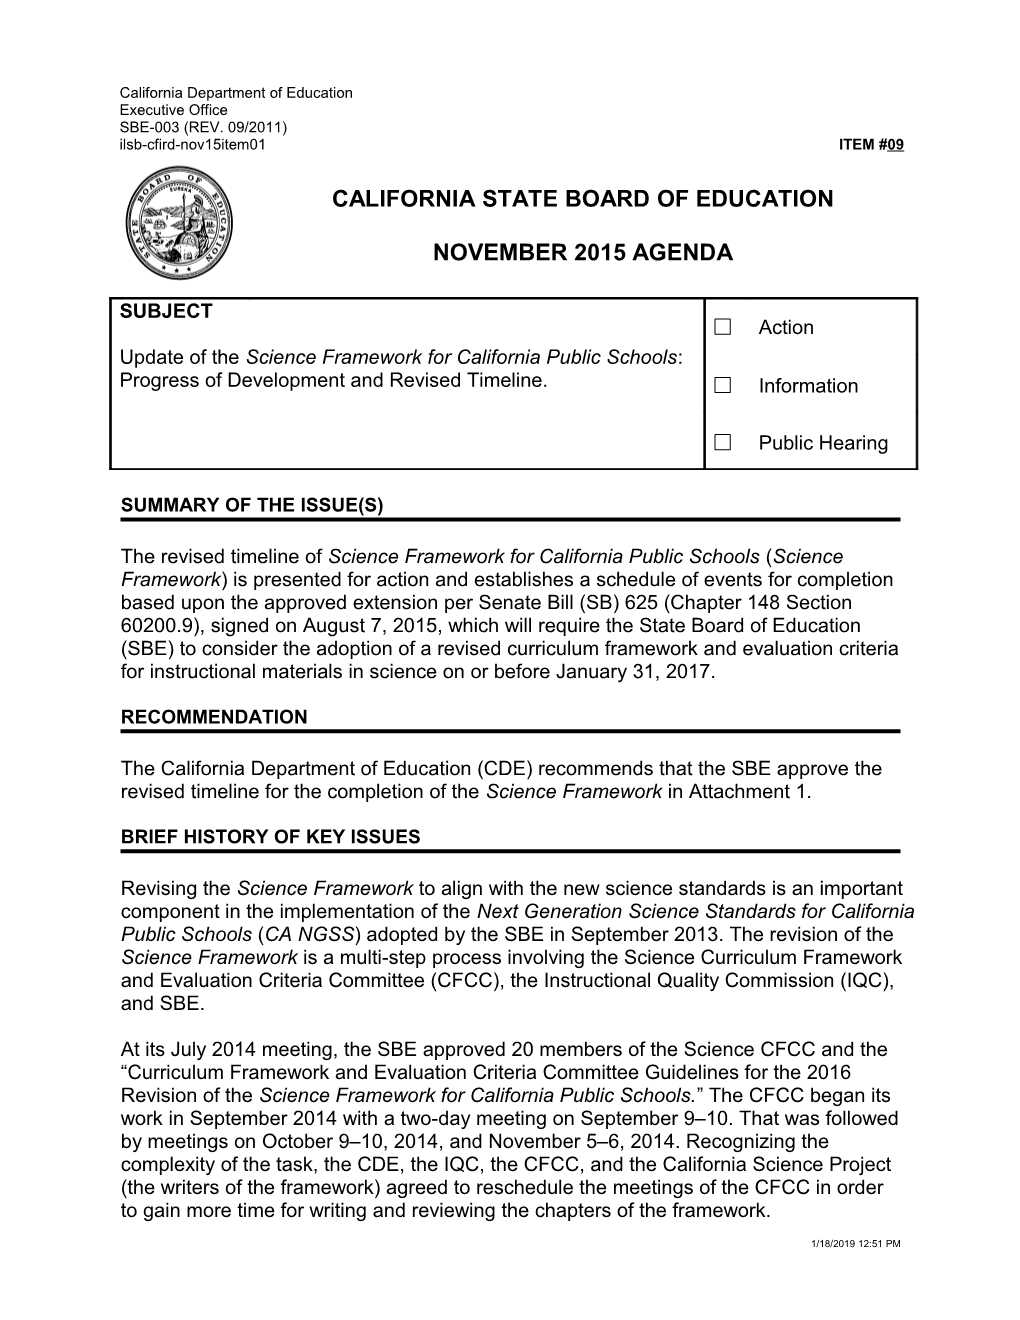 November 2015 Agenda Item 09 - Meeting Agendas (CA State Board of Education)